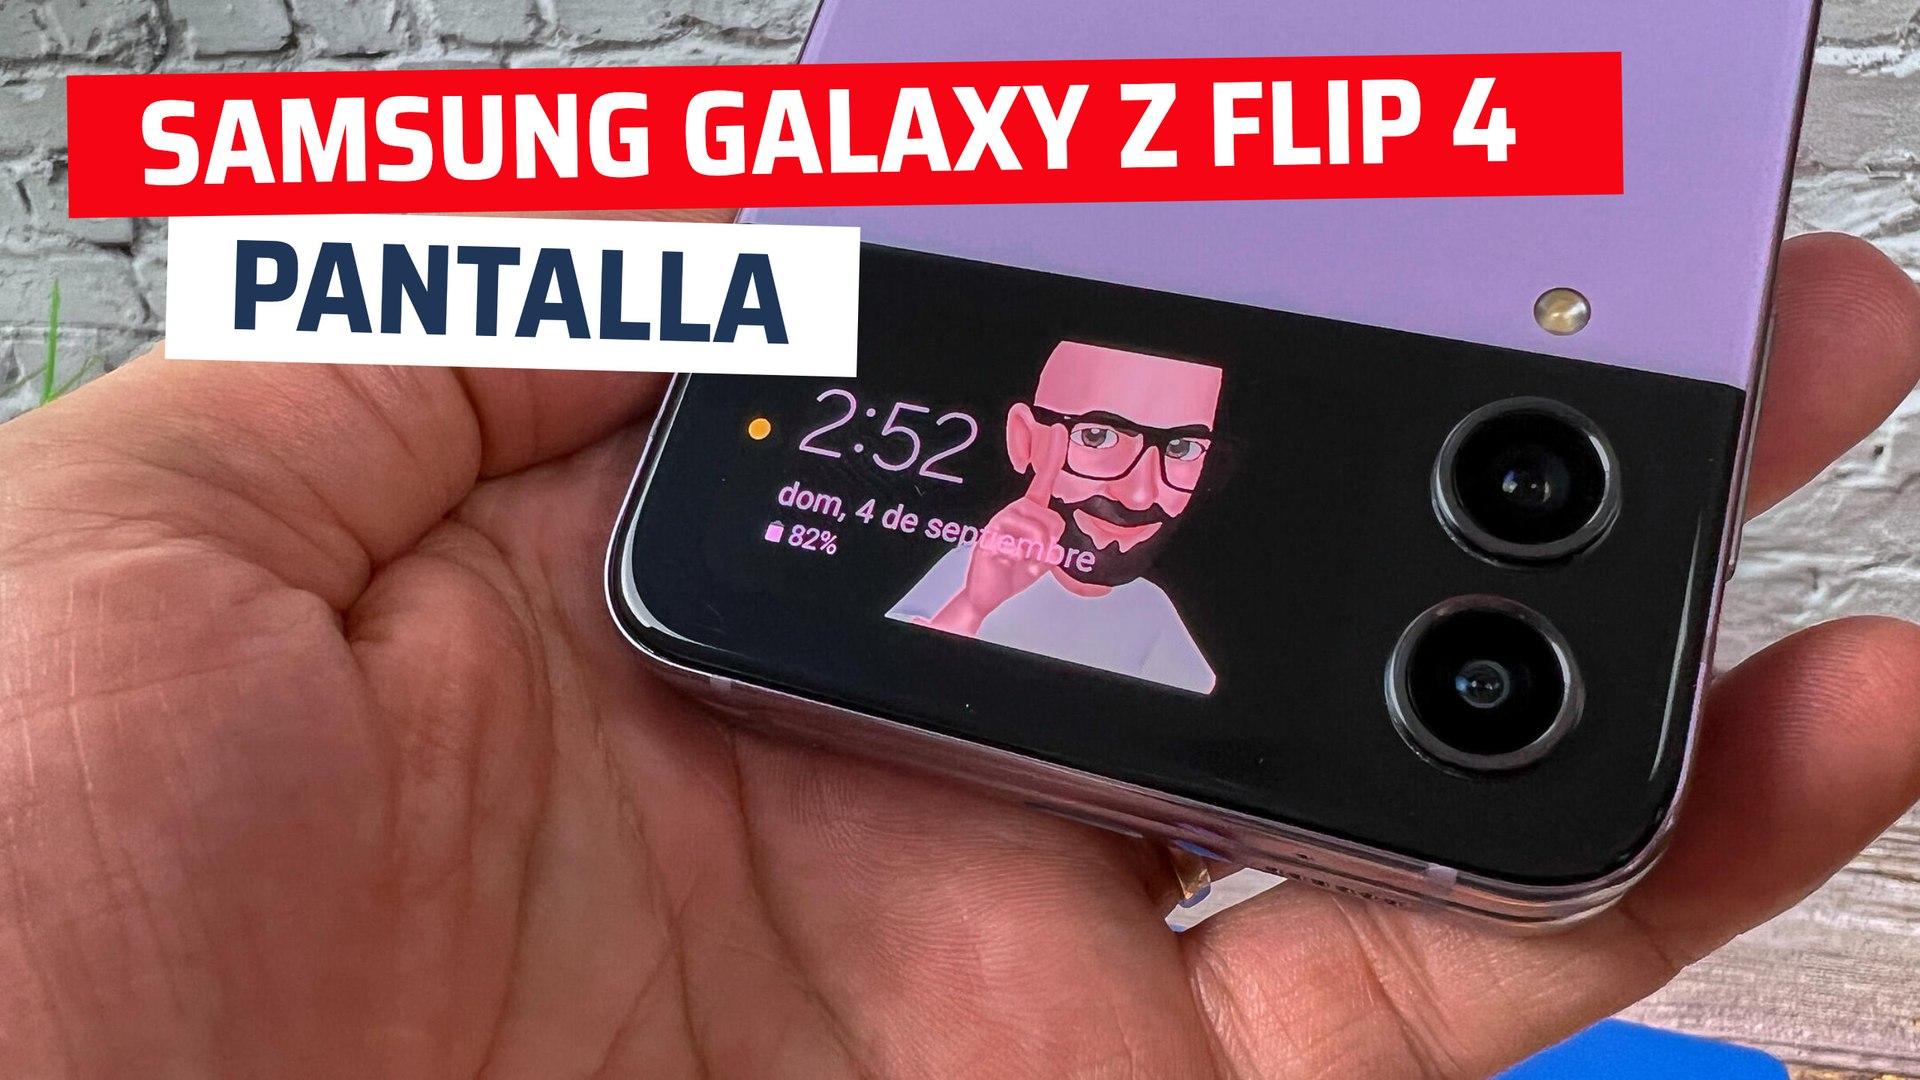 Samsung Galaxy Z Flip 4 - Pantalla trasera - Vídeo Dailymotion